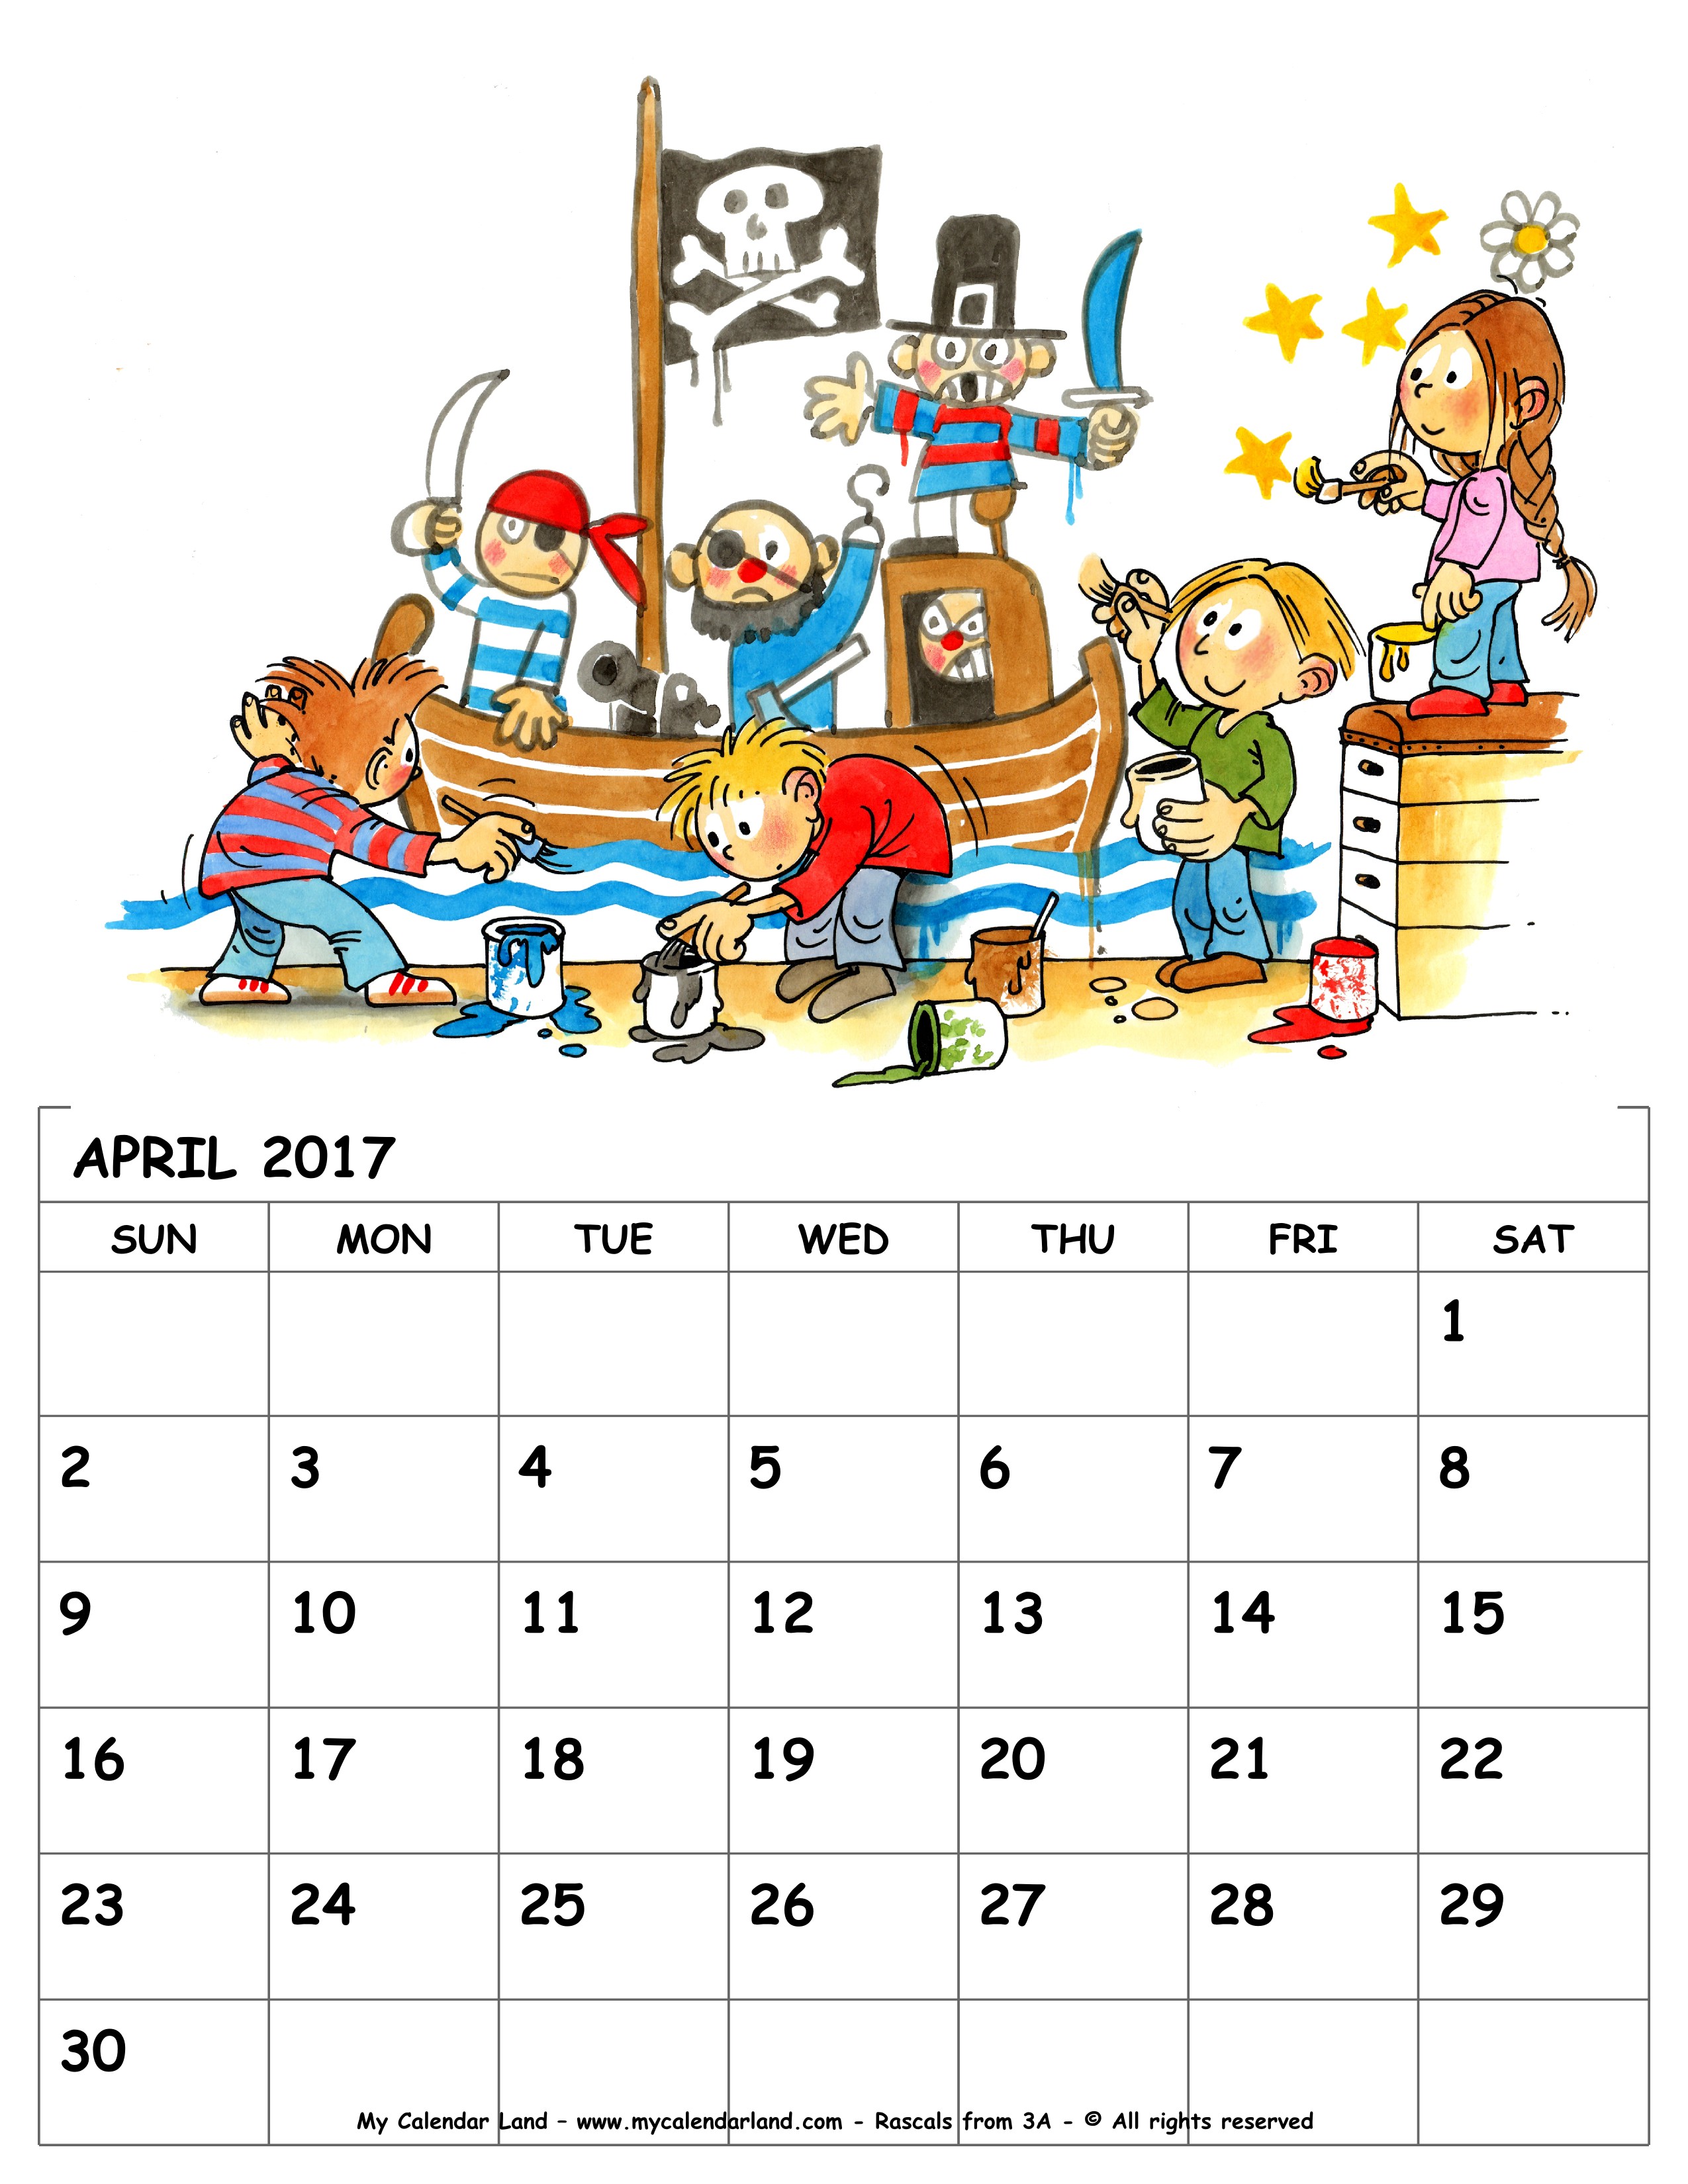 april 2017 calendar my calendar land